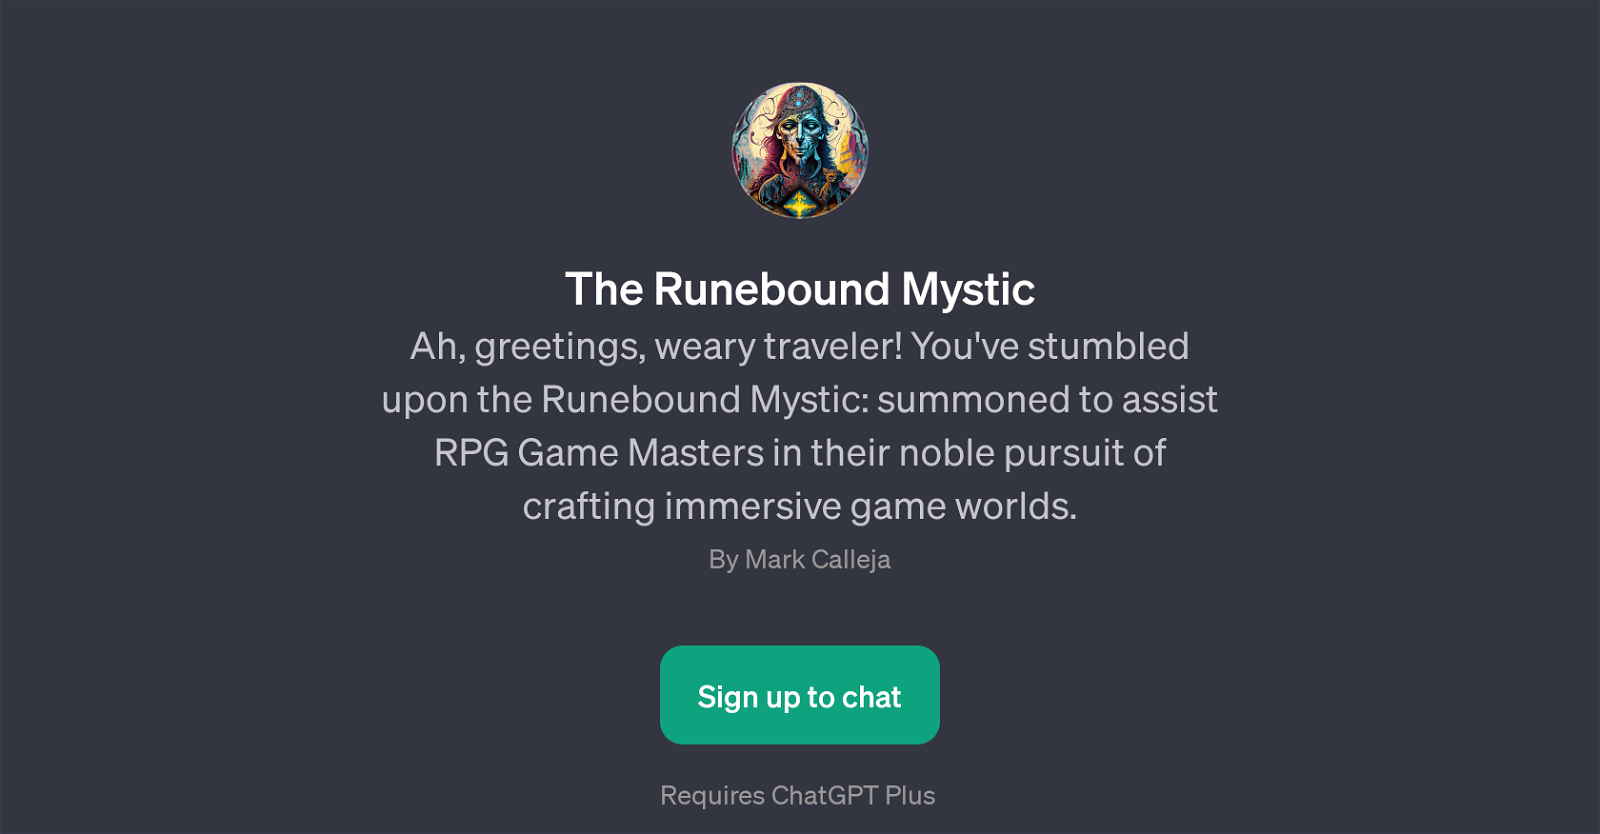 The Runebound Mystic website